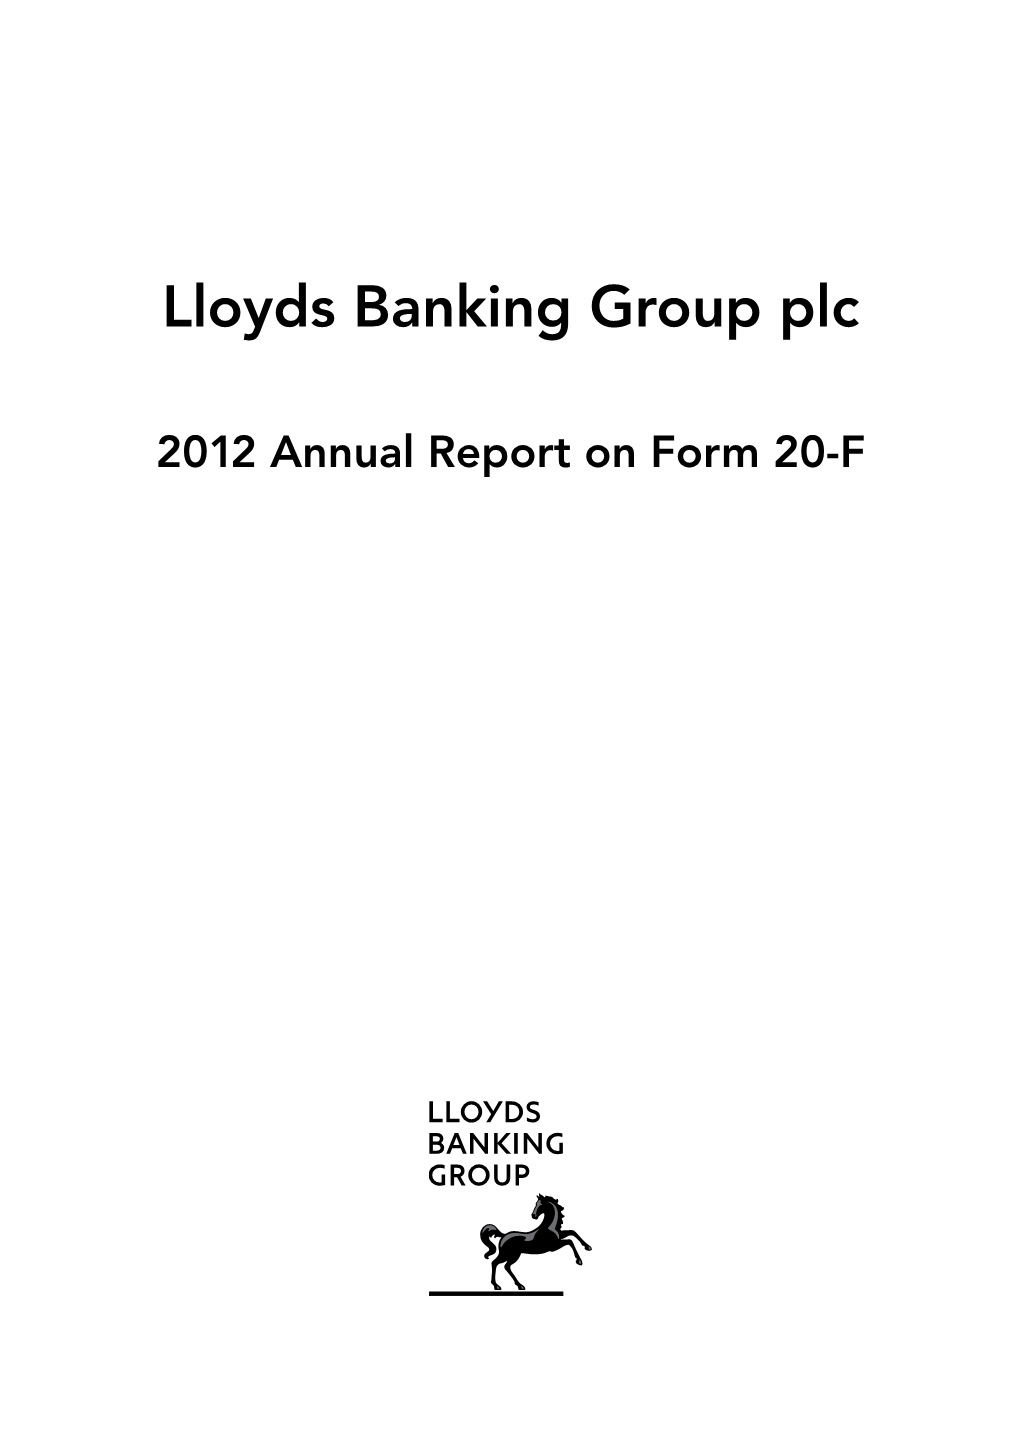 Form 20F (SEC Filing) 2012